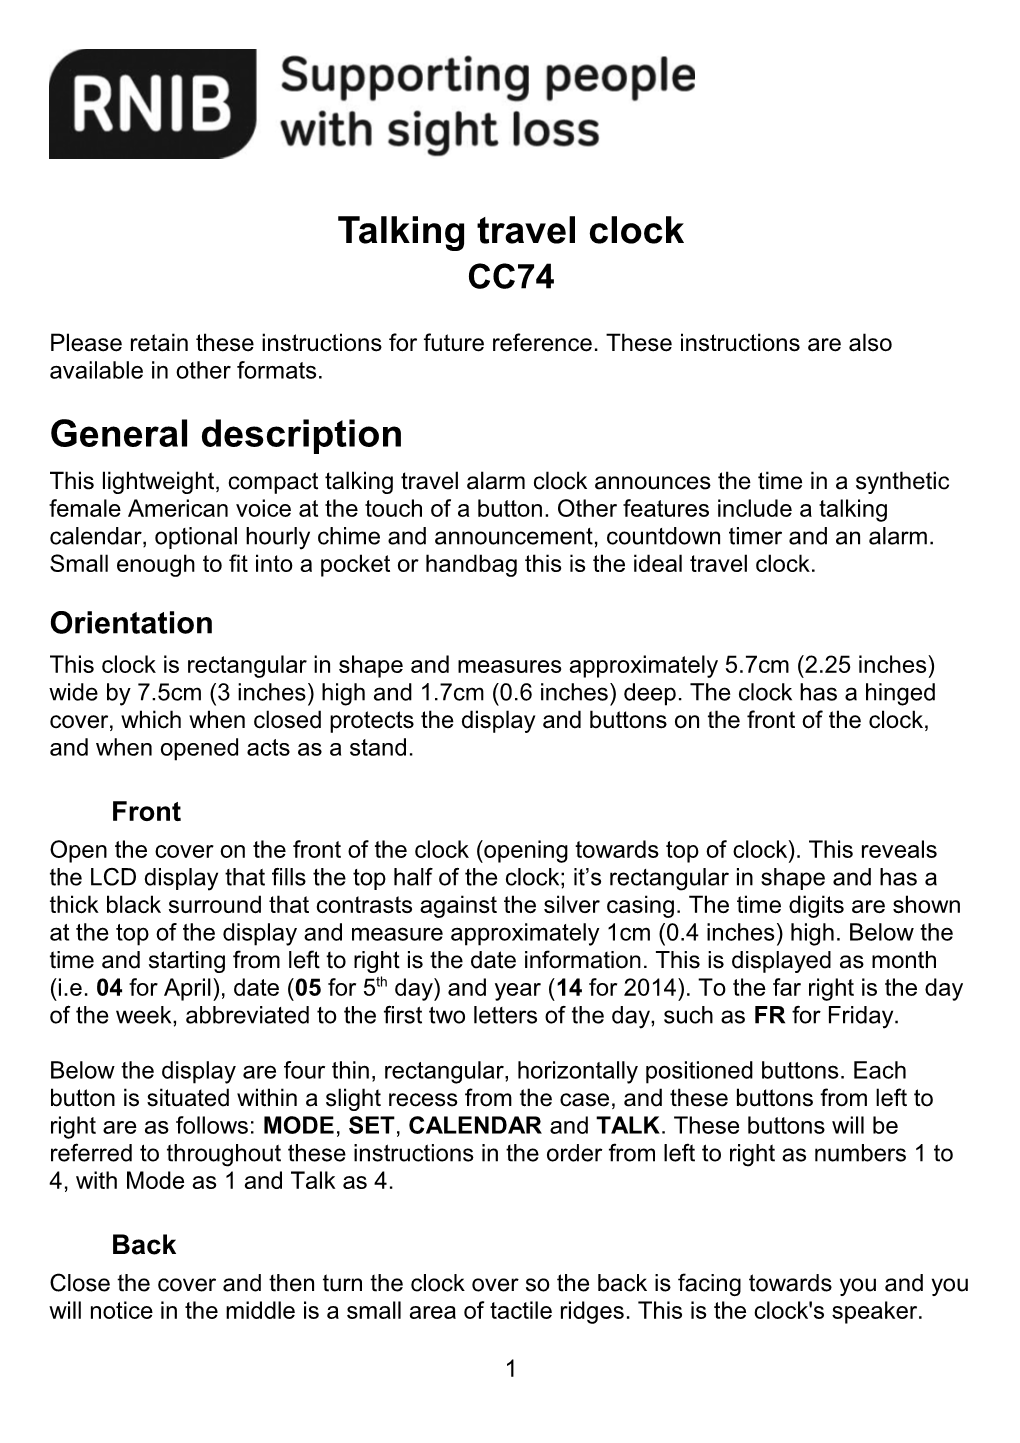 Talking Travel Clock